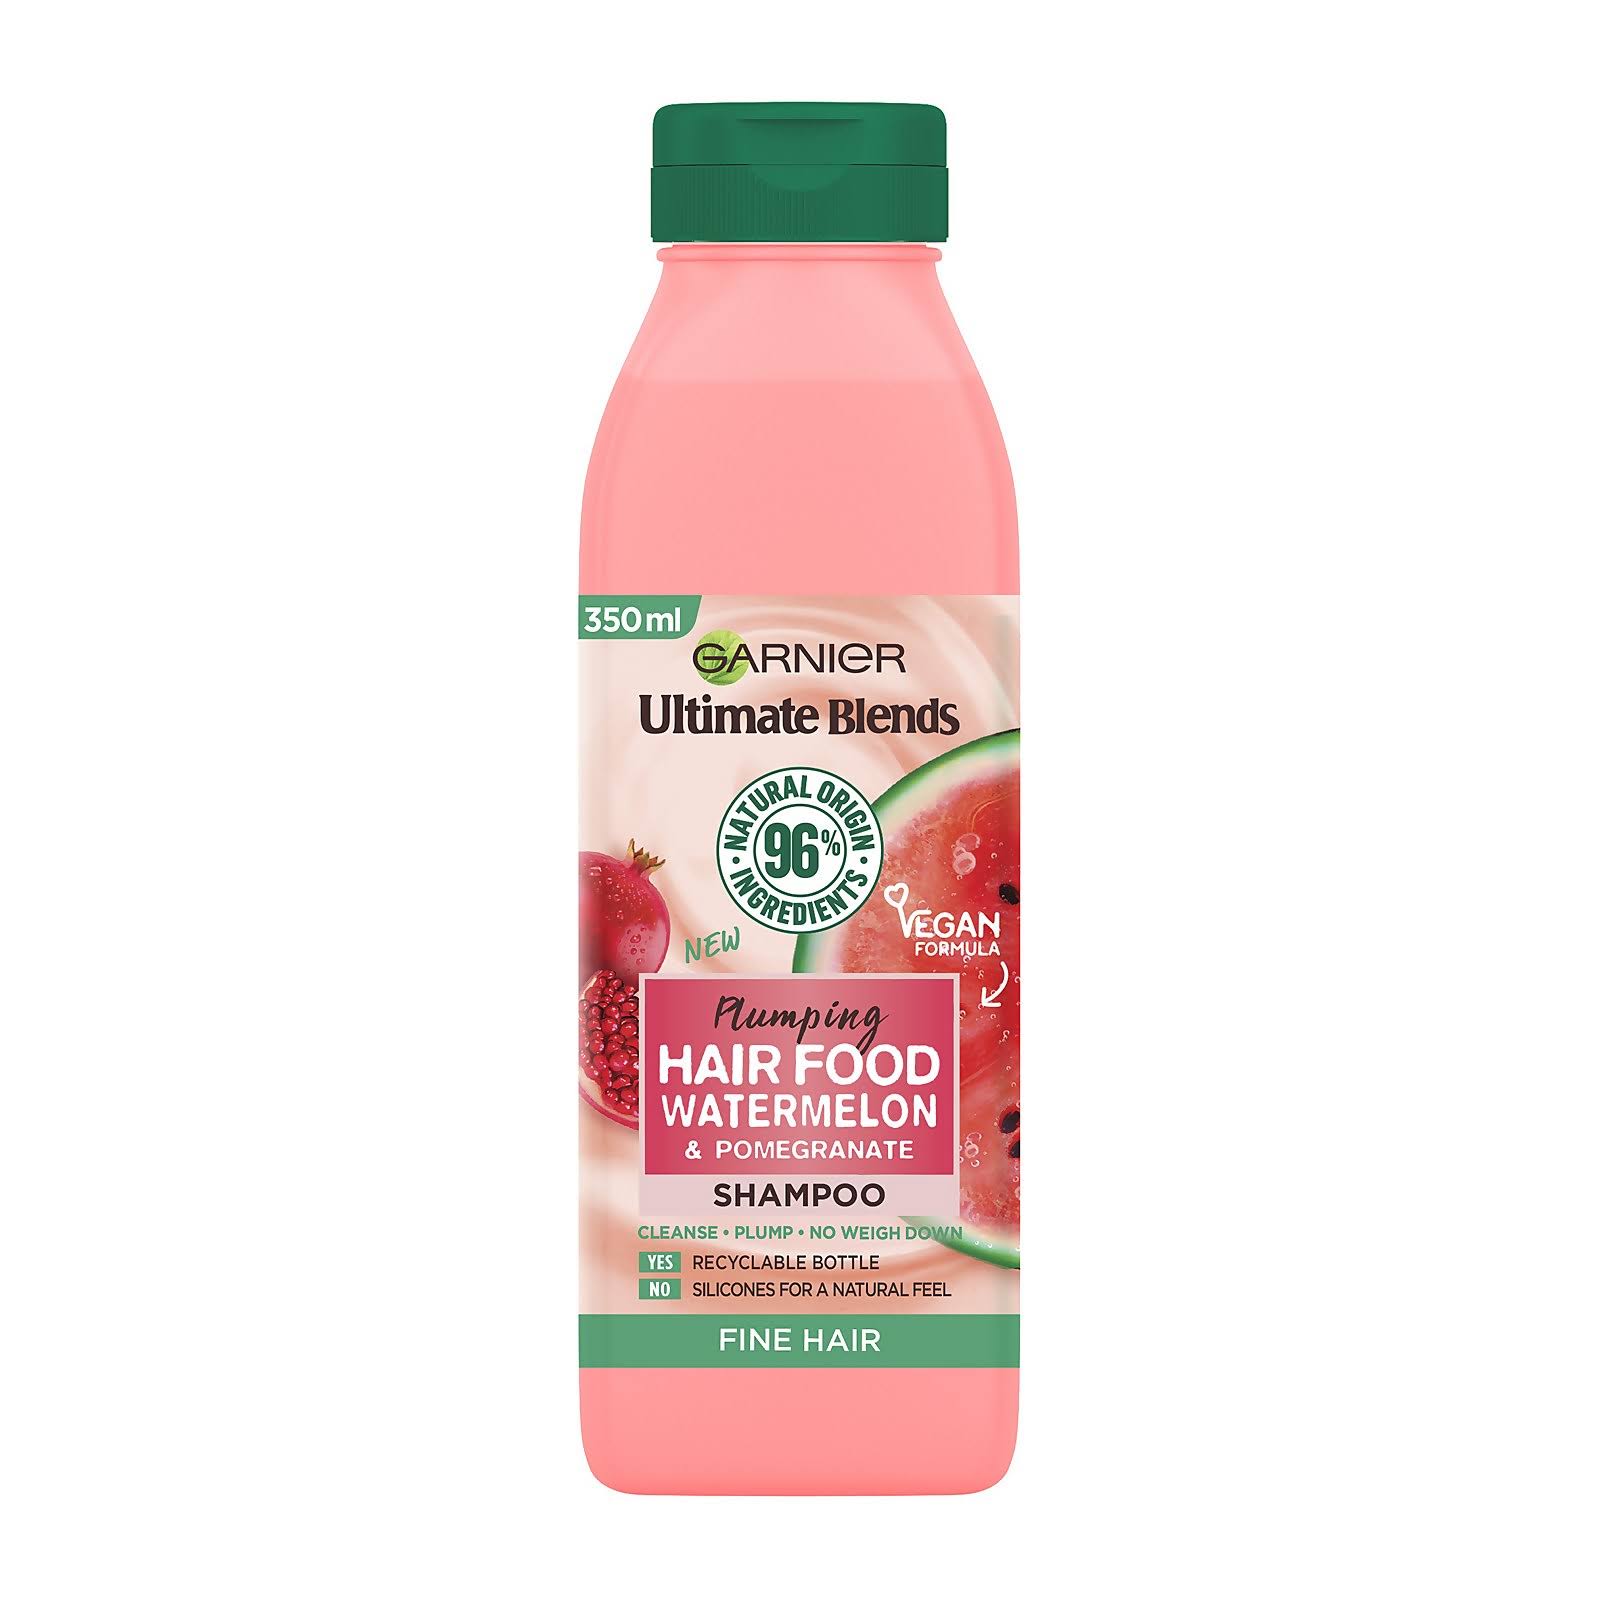 Garnier Ultimate Blends Watermelon Shampoo - 350ml